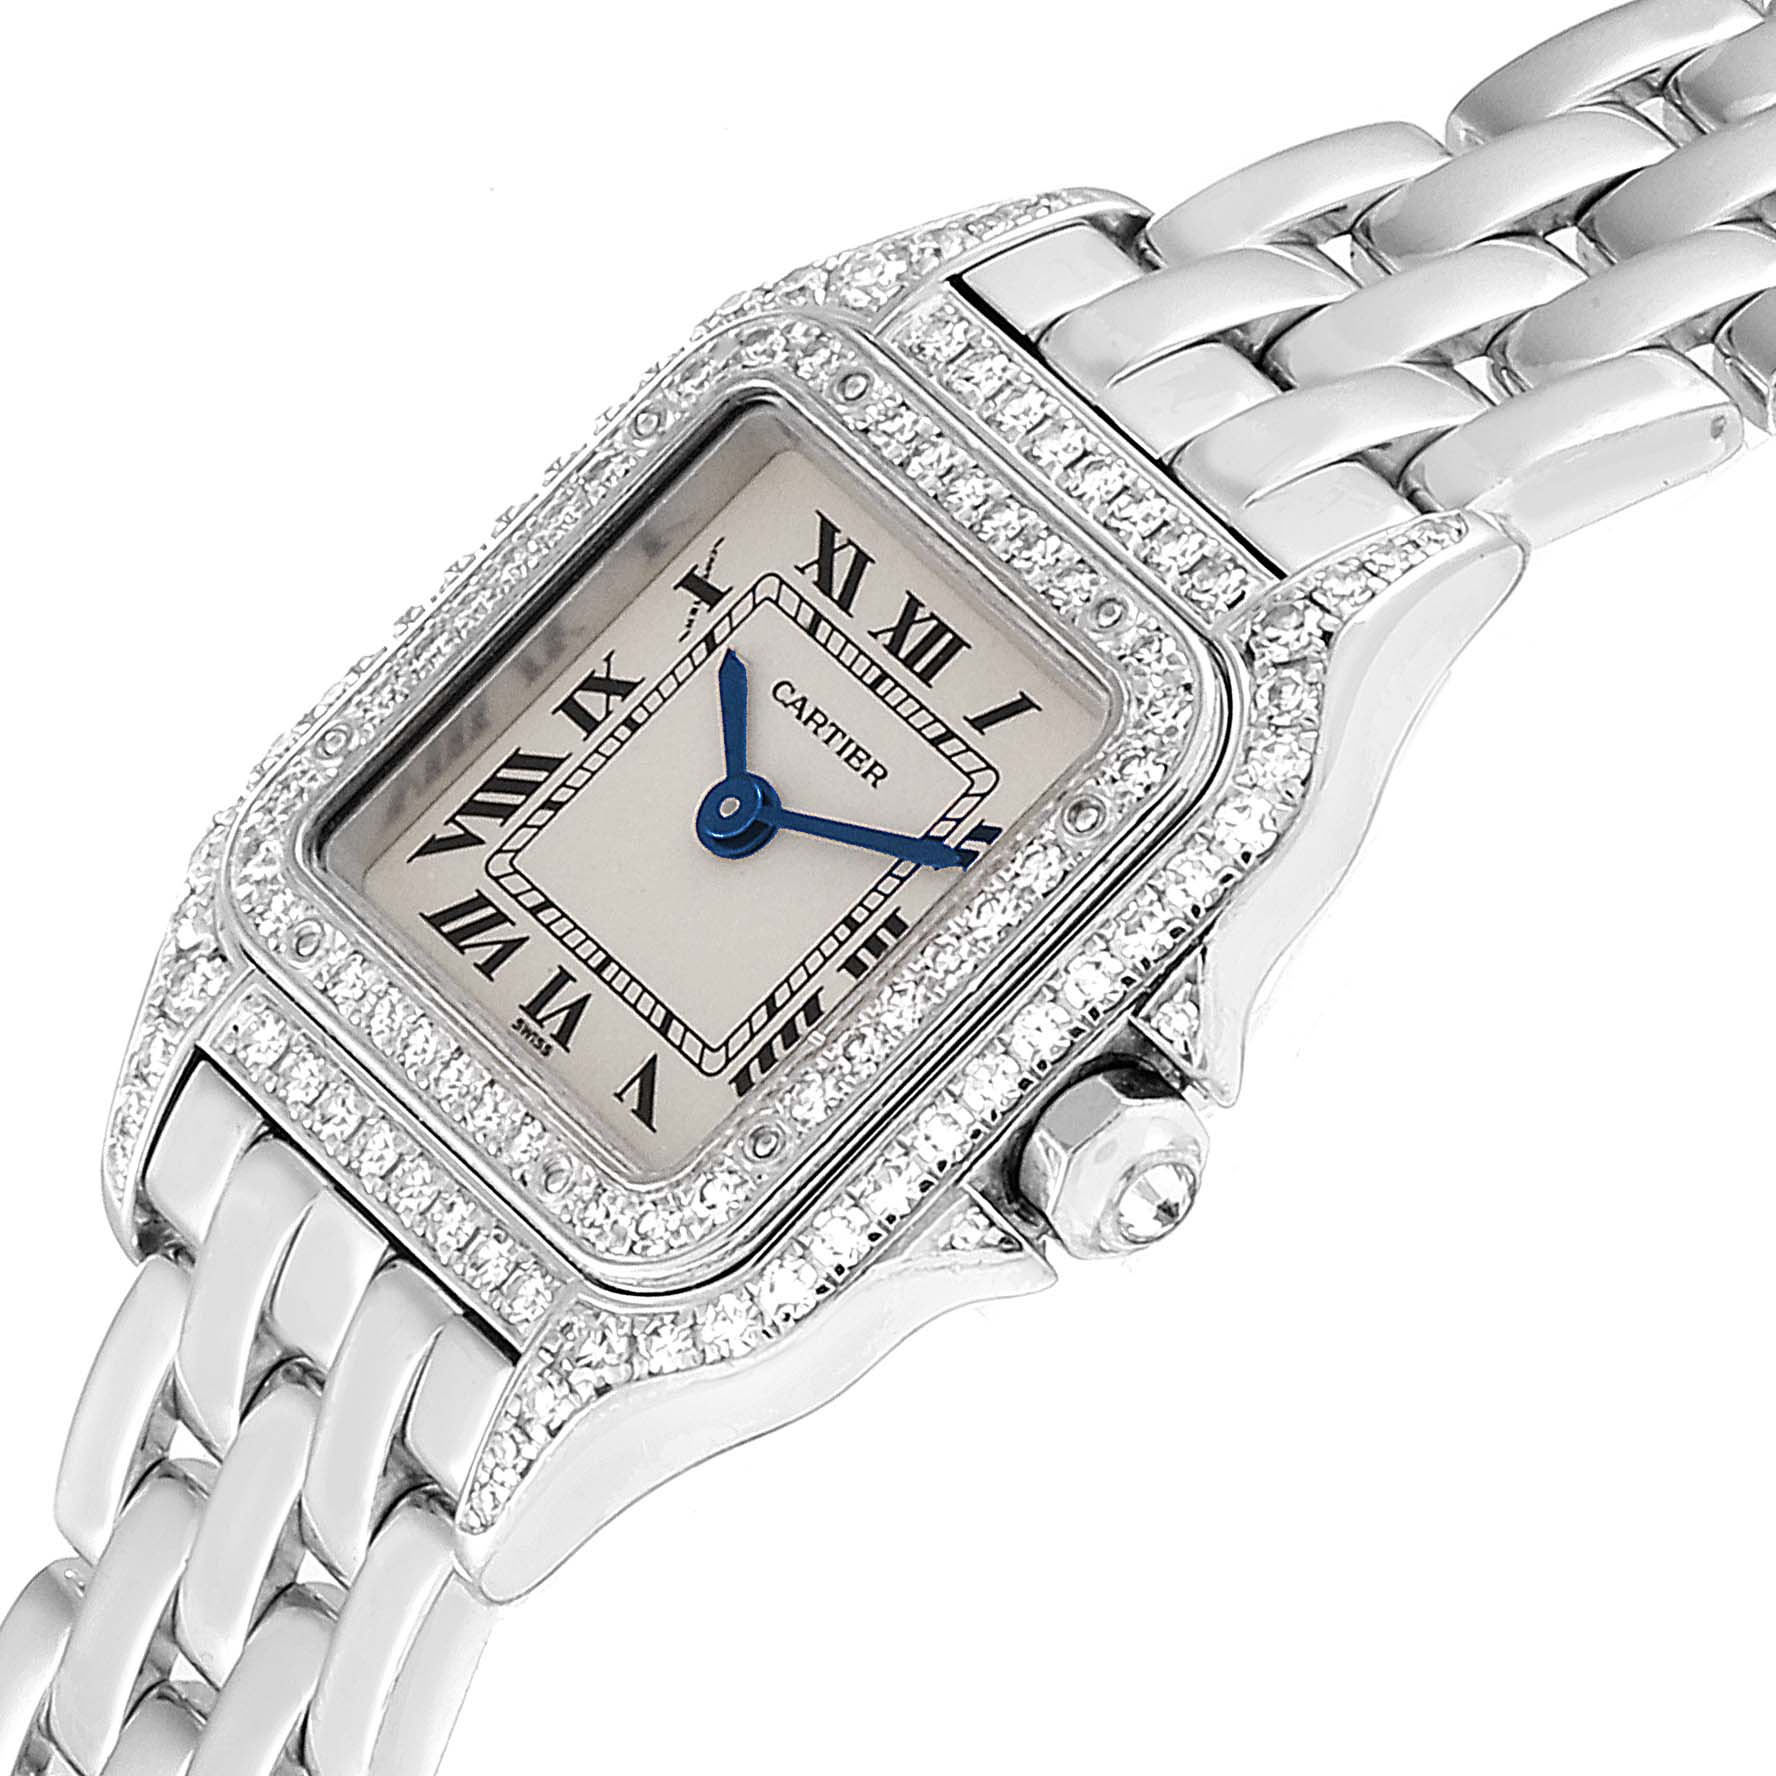 Cartier Panthere 18k White Gold Diamonds Ladies Watch 1660 SwissWatchExpo